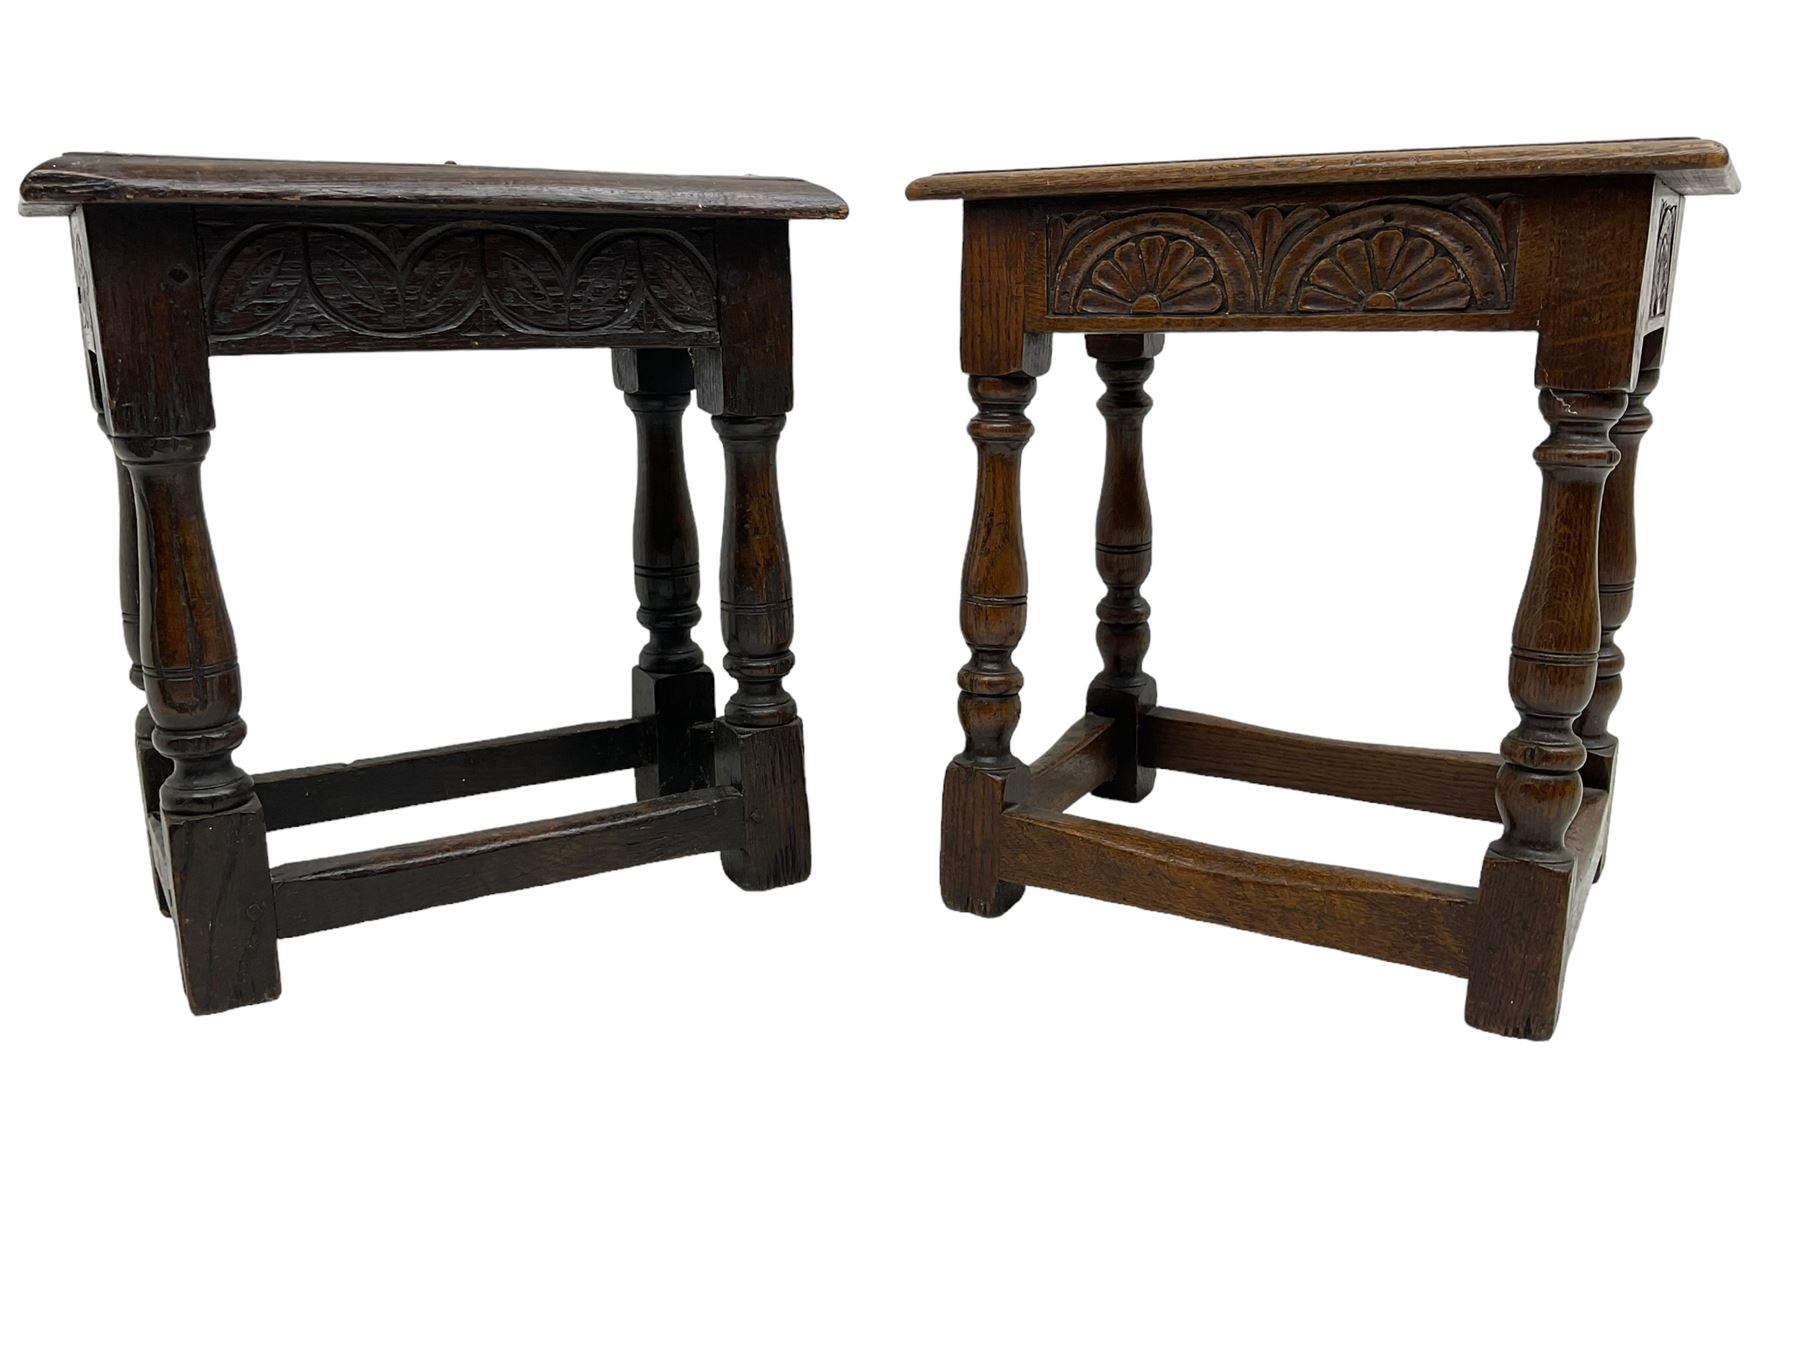 17th century design oak stool